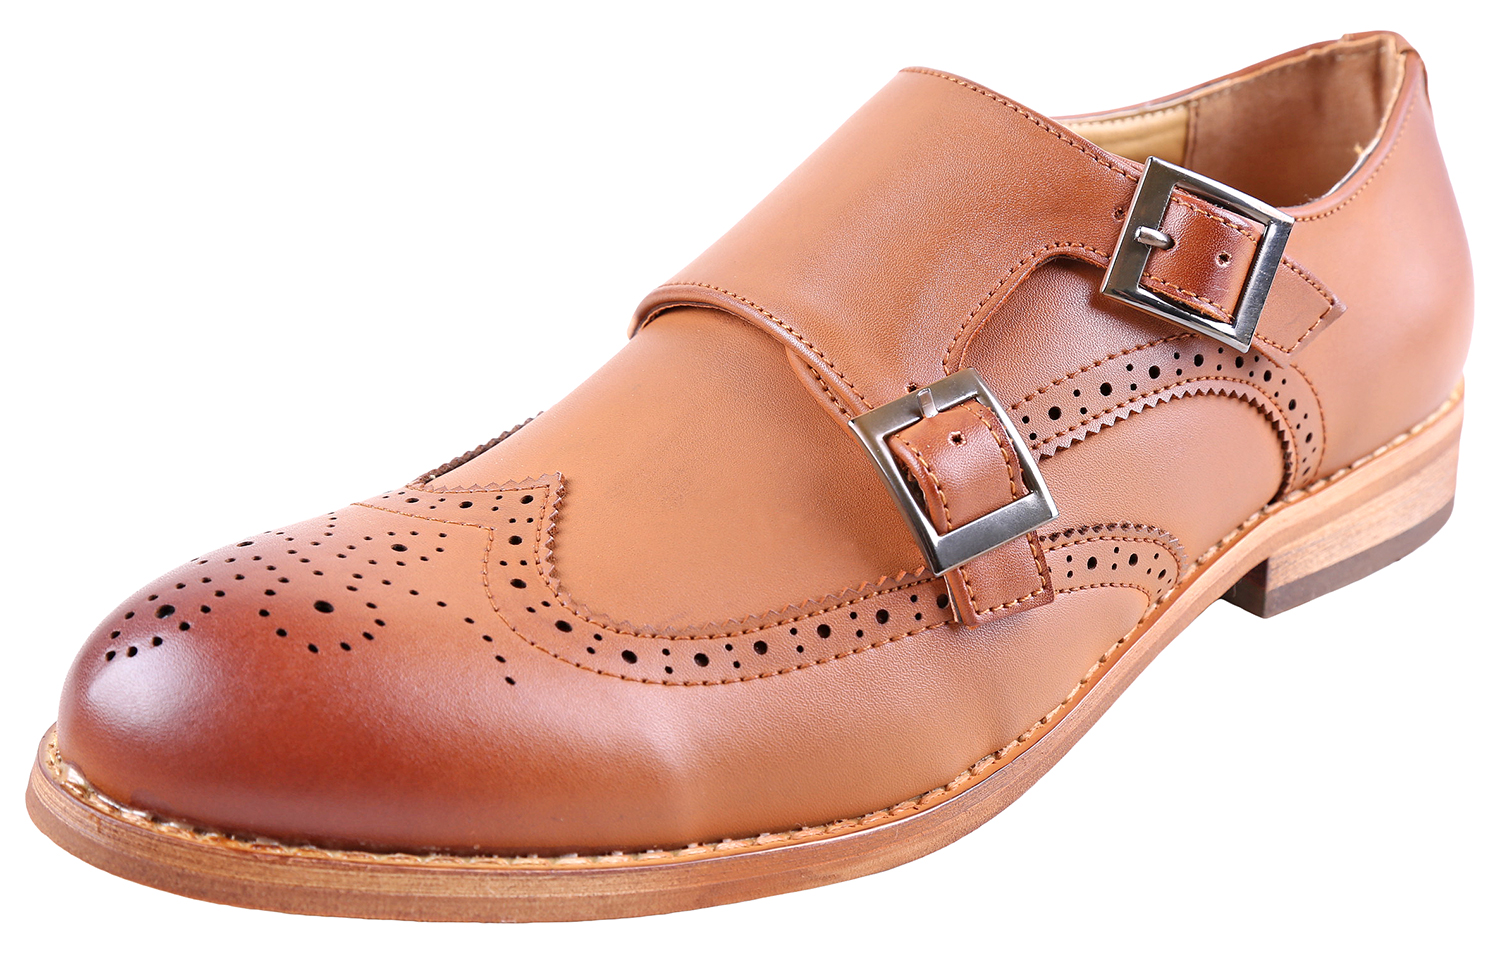 Urban Fox Allen Men's Dress Shoe | Double Monk Strap | Brogue | Wingtip Shoes for Men | Light Brown 10 M US - image 1 of 7